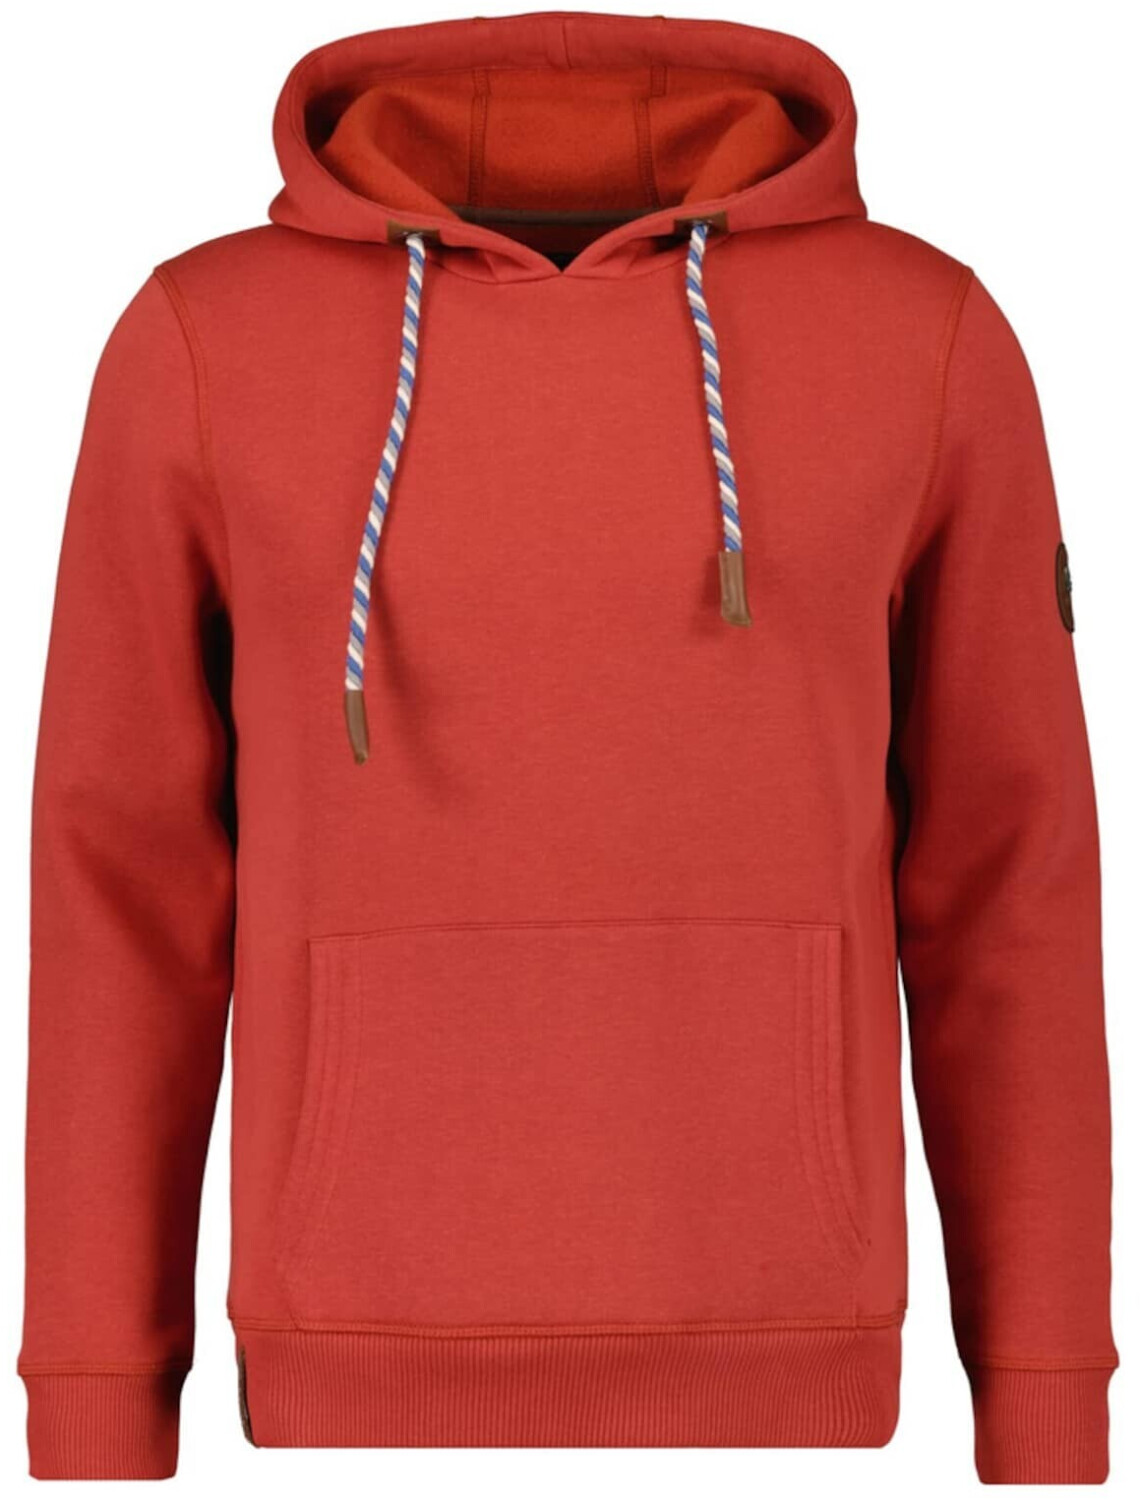 Ragman Hoody-Sweater (809096-063) rostrot ab 59,95 € | Preisvergleich bei | Sweatshirts